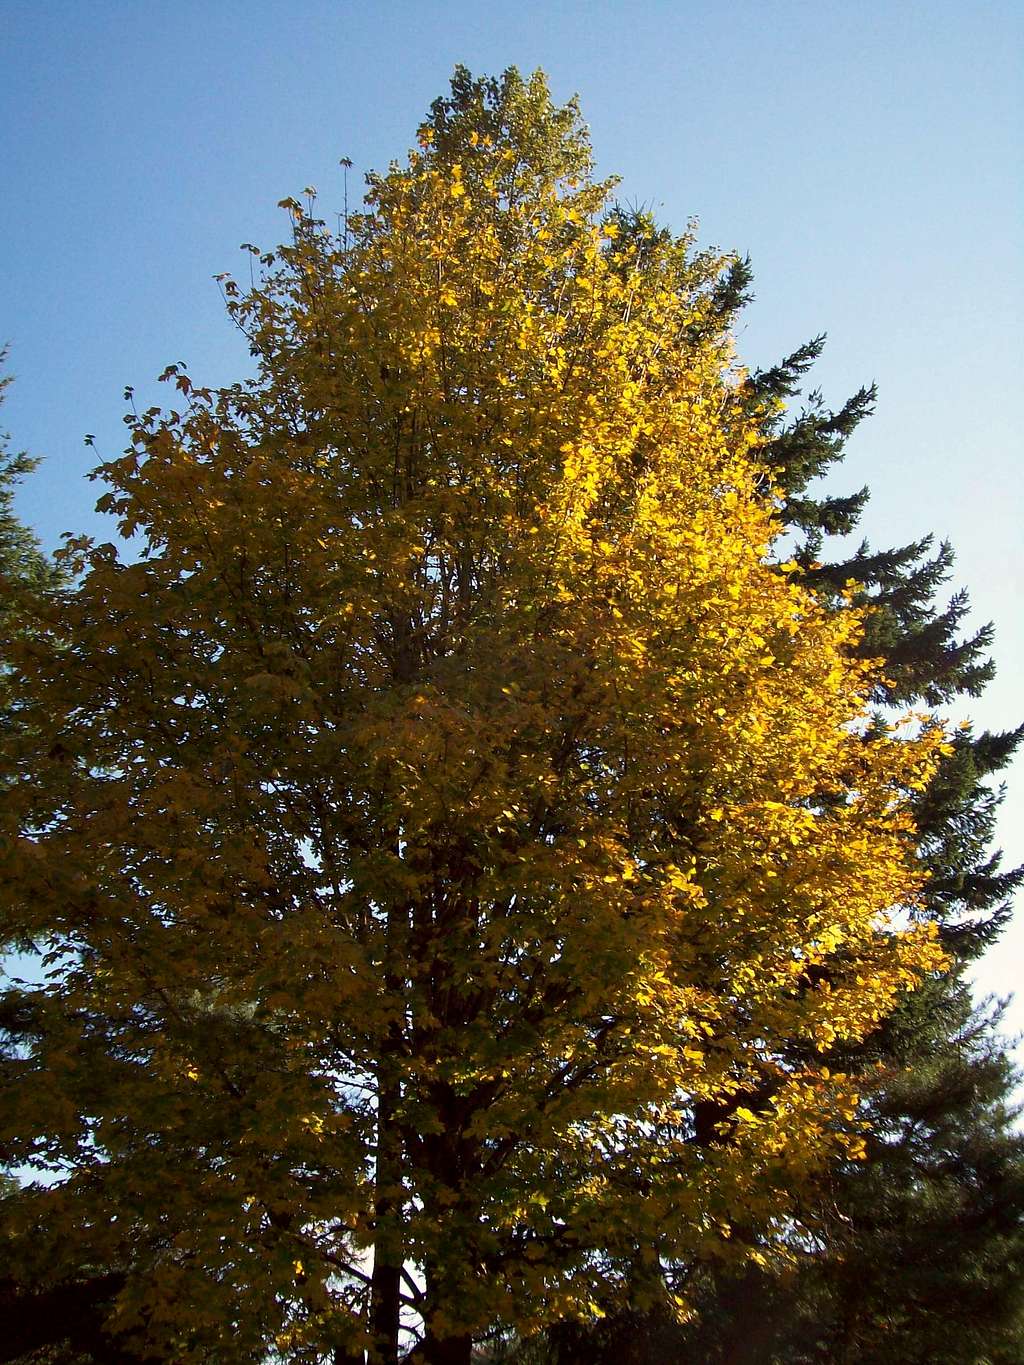 Classic Fall Tree